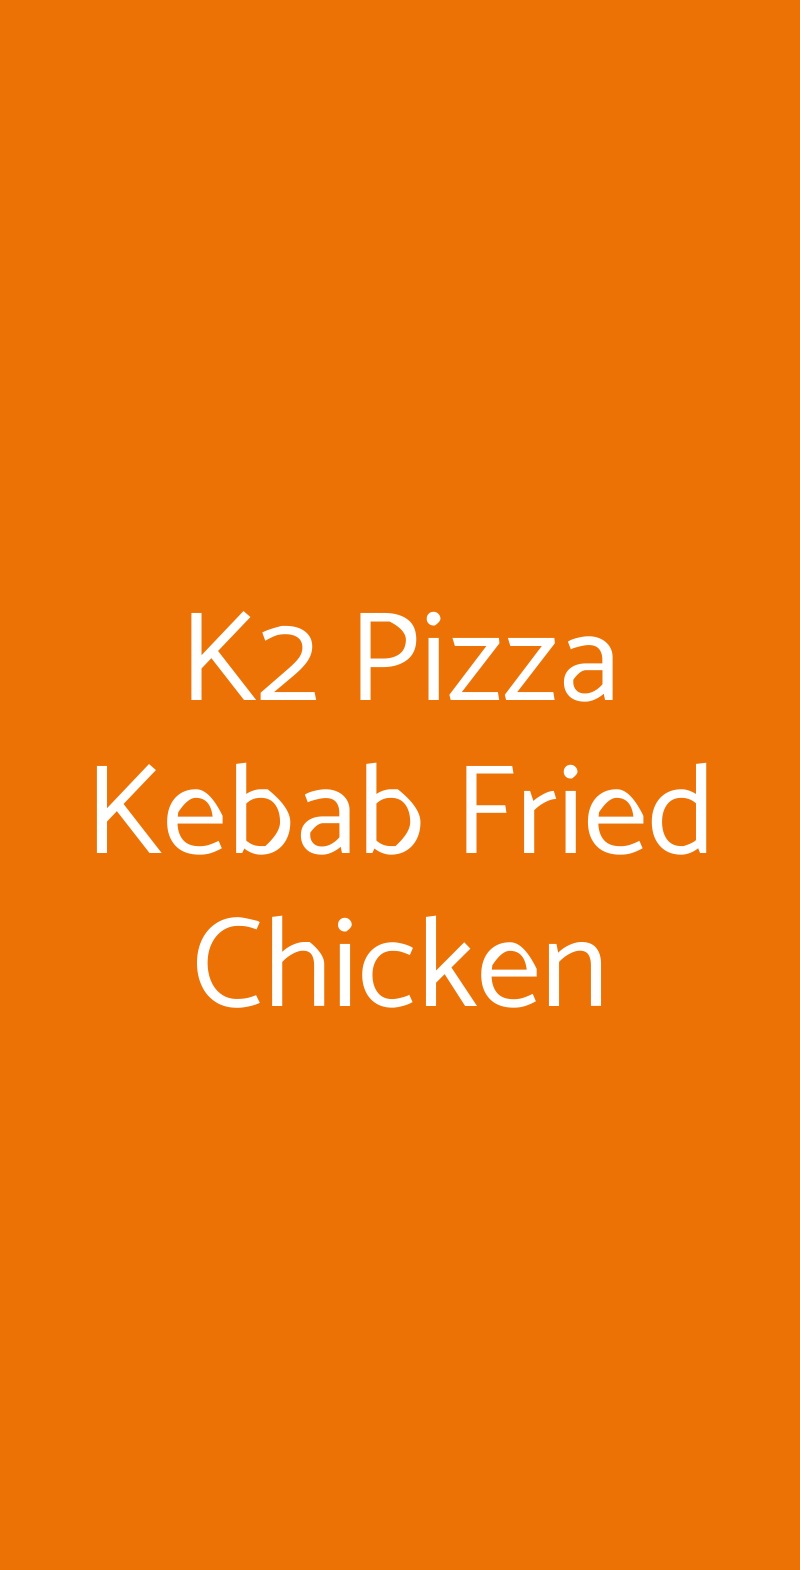 K2 Pizza Kebab Fried Chicken Chieri menù 1 pagina